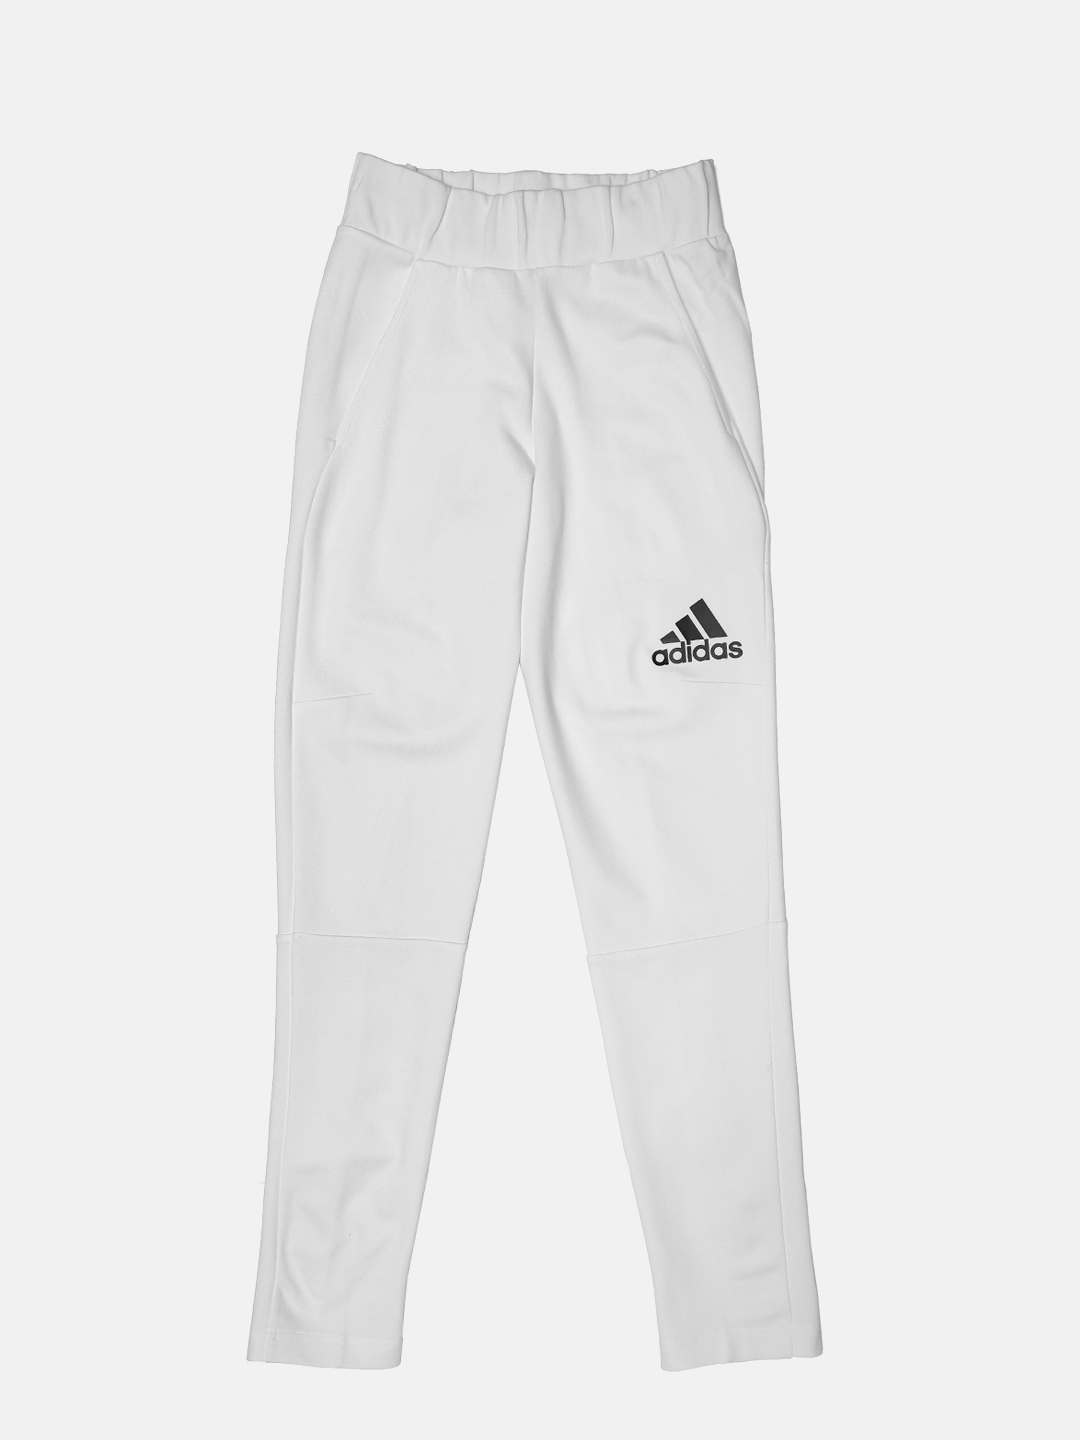 adidas Originals adicolor locked up logo track pants in white | ASOS